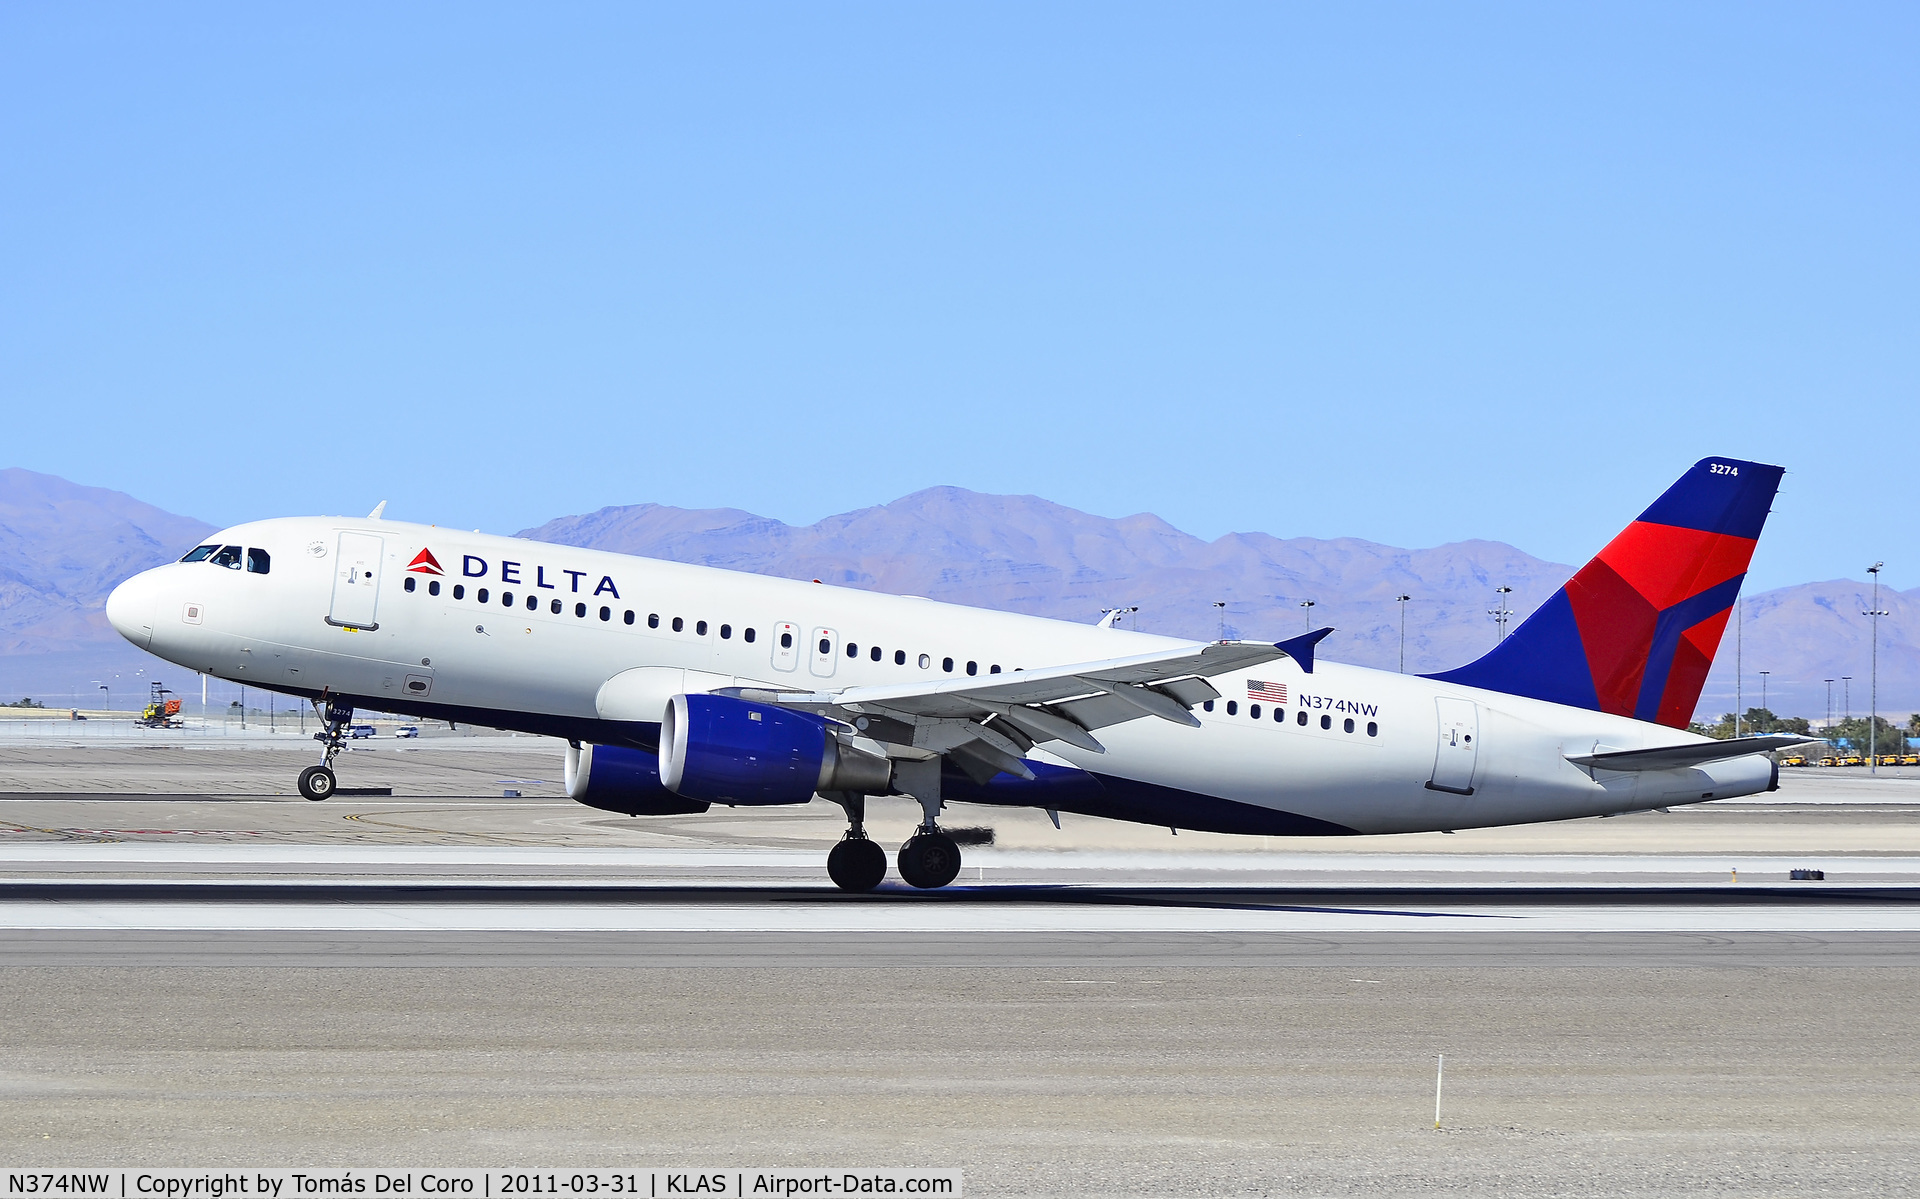 N374NW, 2001 Airbus A320-212 C/N 1646, Delta Air Lines Airbus 2001 A320-212 N374NW / 3274 (cn 1646)

Las Vegas - McCarran International (LAS / KLAS)
USA - Nevada, March 31, 2011
Photo: Tomás Del Coro